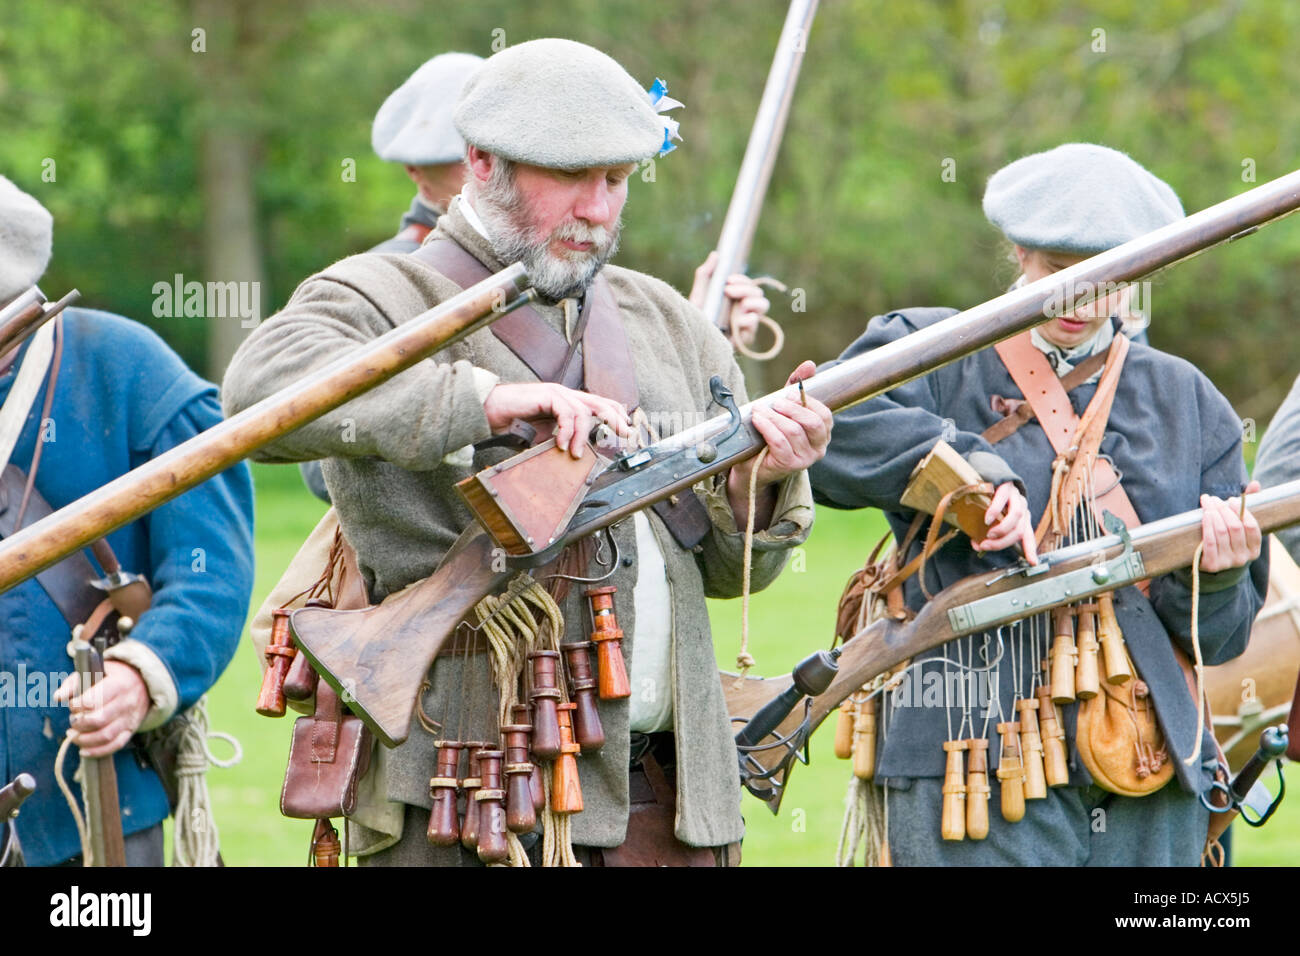 Covenanter soldier primes musket firing mechanism with gunpowder Stock Photo